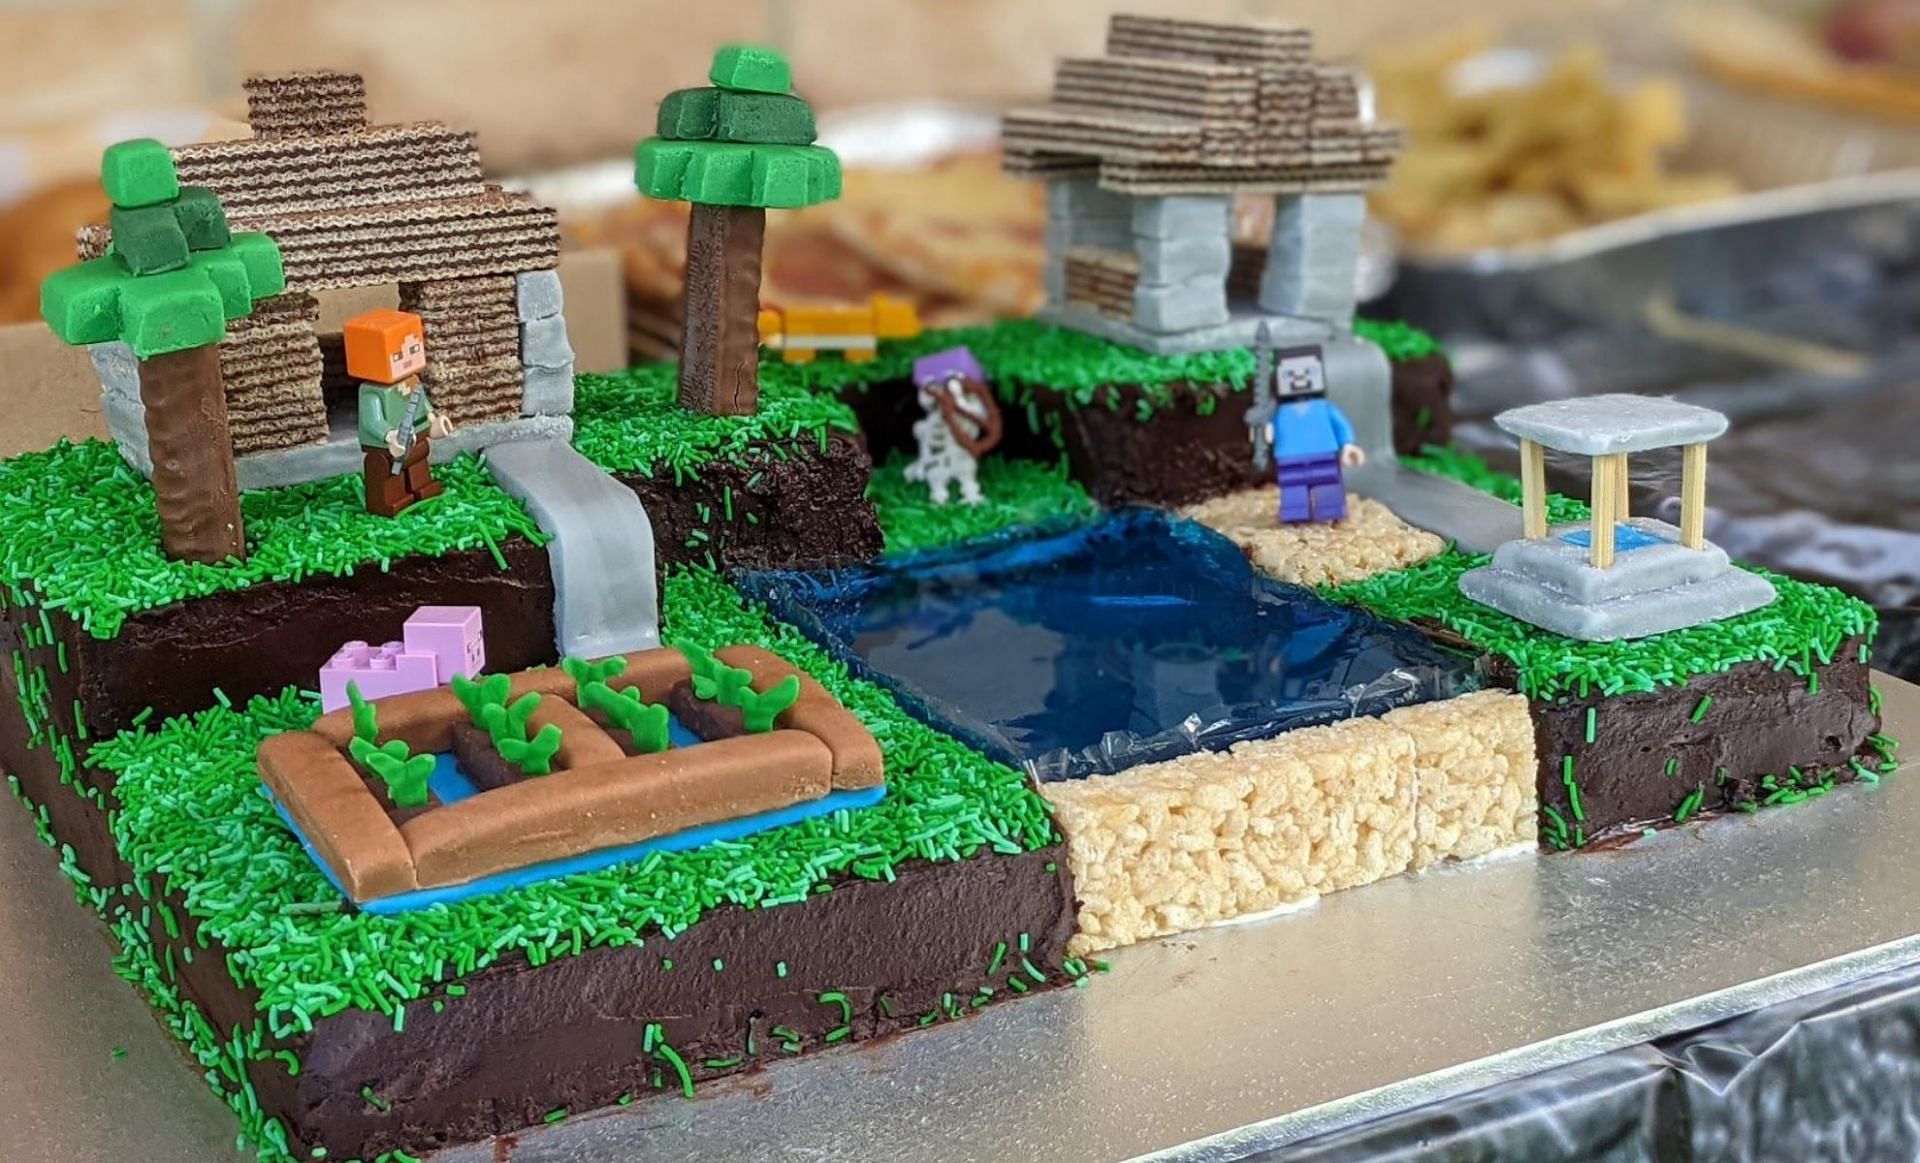 The home-made Minecraft cake (Image via u/aNoPHeLeS84 on Reddit)